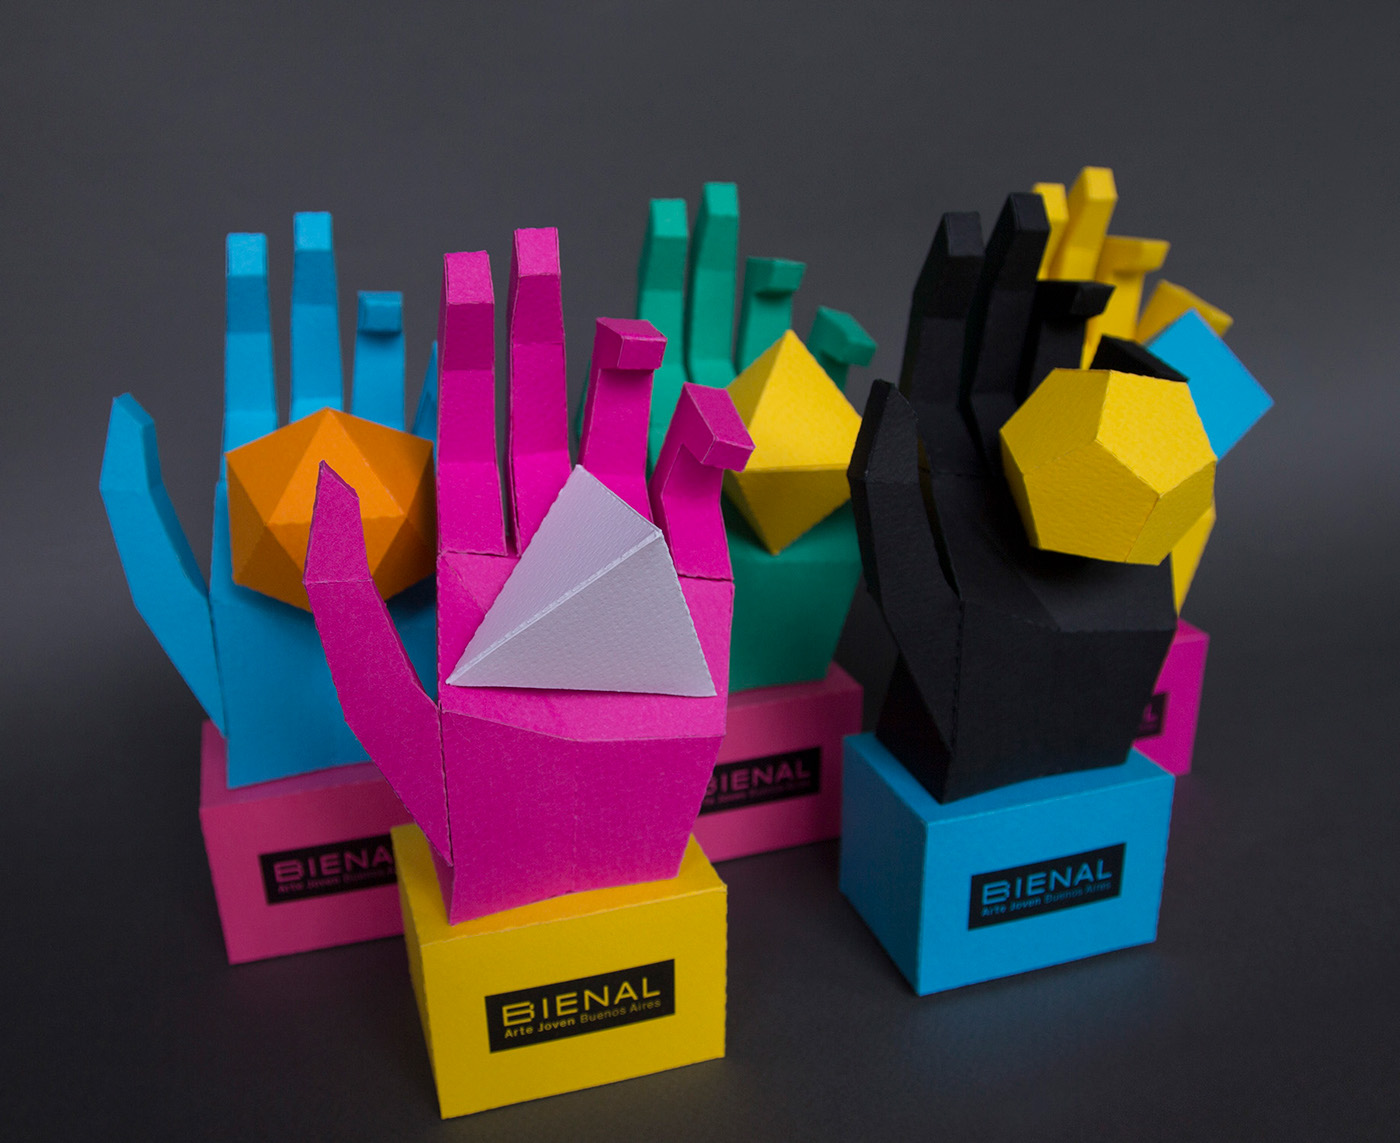 bienal bienal de arte Awards premios papercraft lowpoly hands platonic